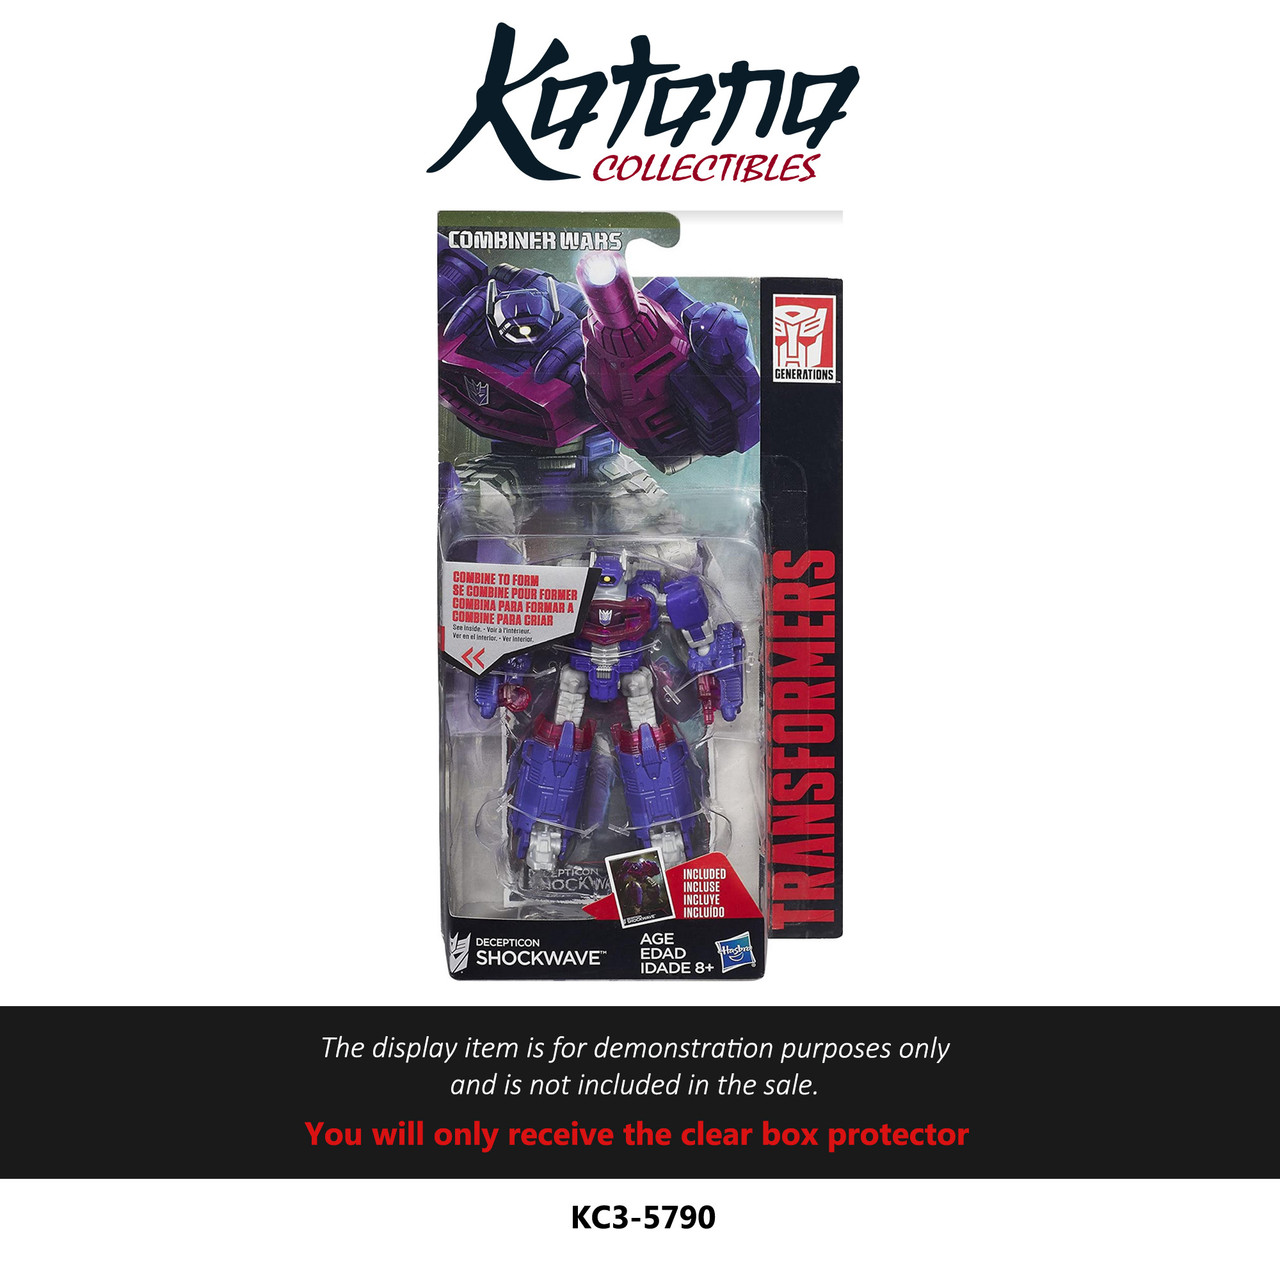 Katana Collectibles Protector For Transformers Combiner Wars Decepticon Shockwave